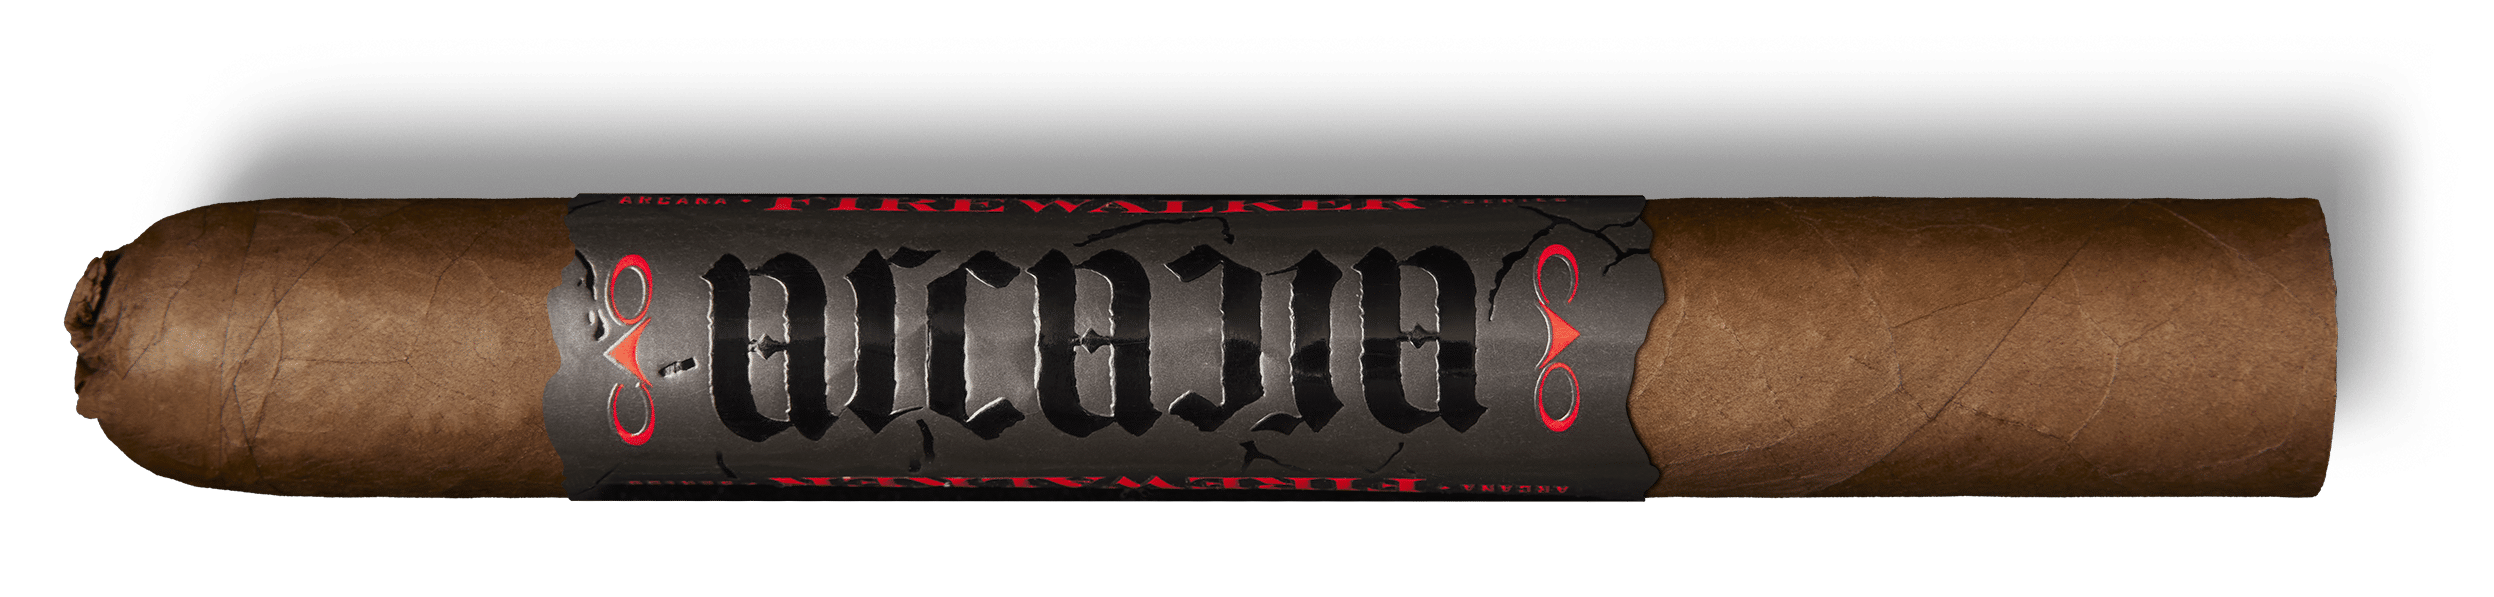 CAO Announces Arcana Series Firewalker - Cigar News